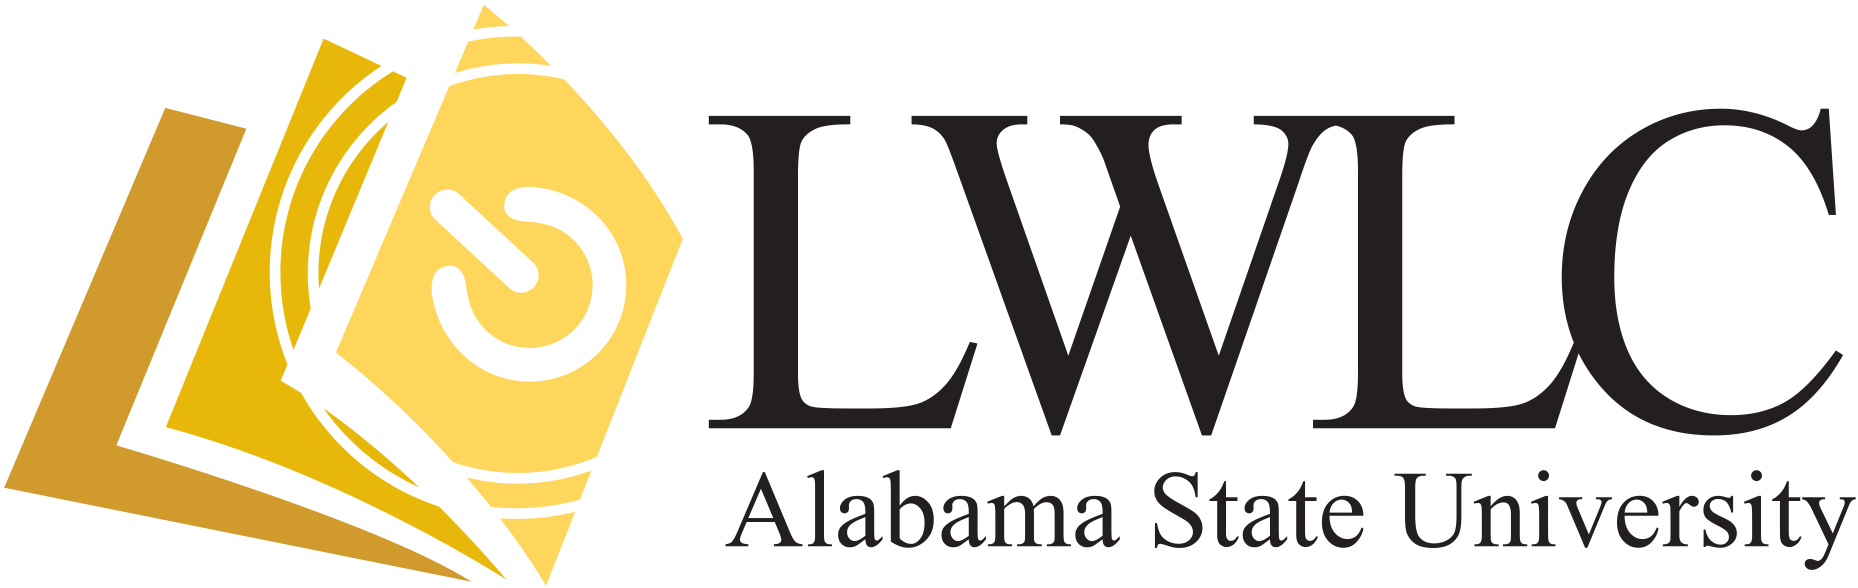 “LWLC” Logo Design